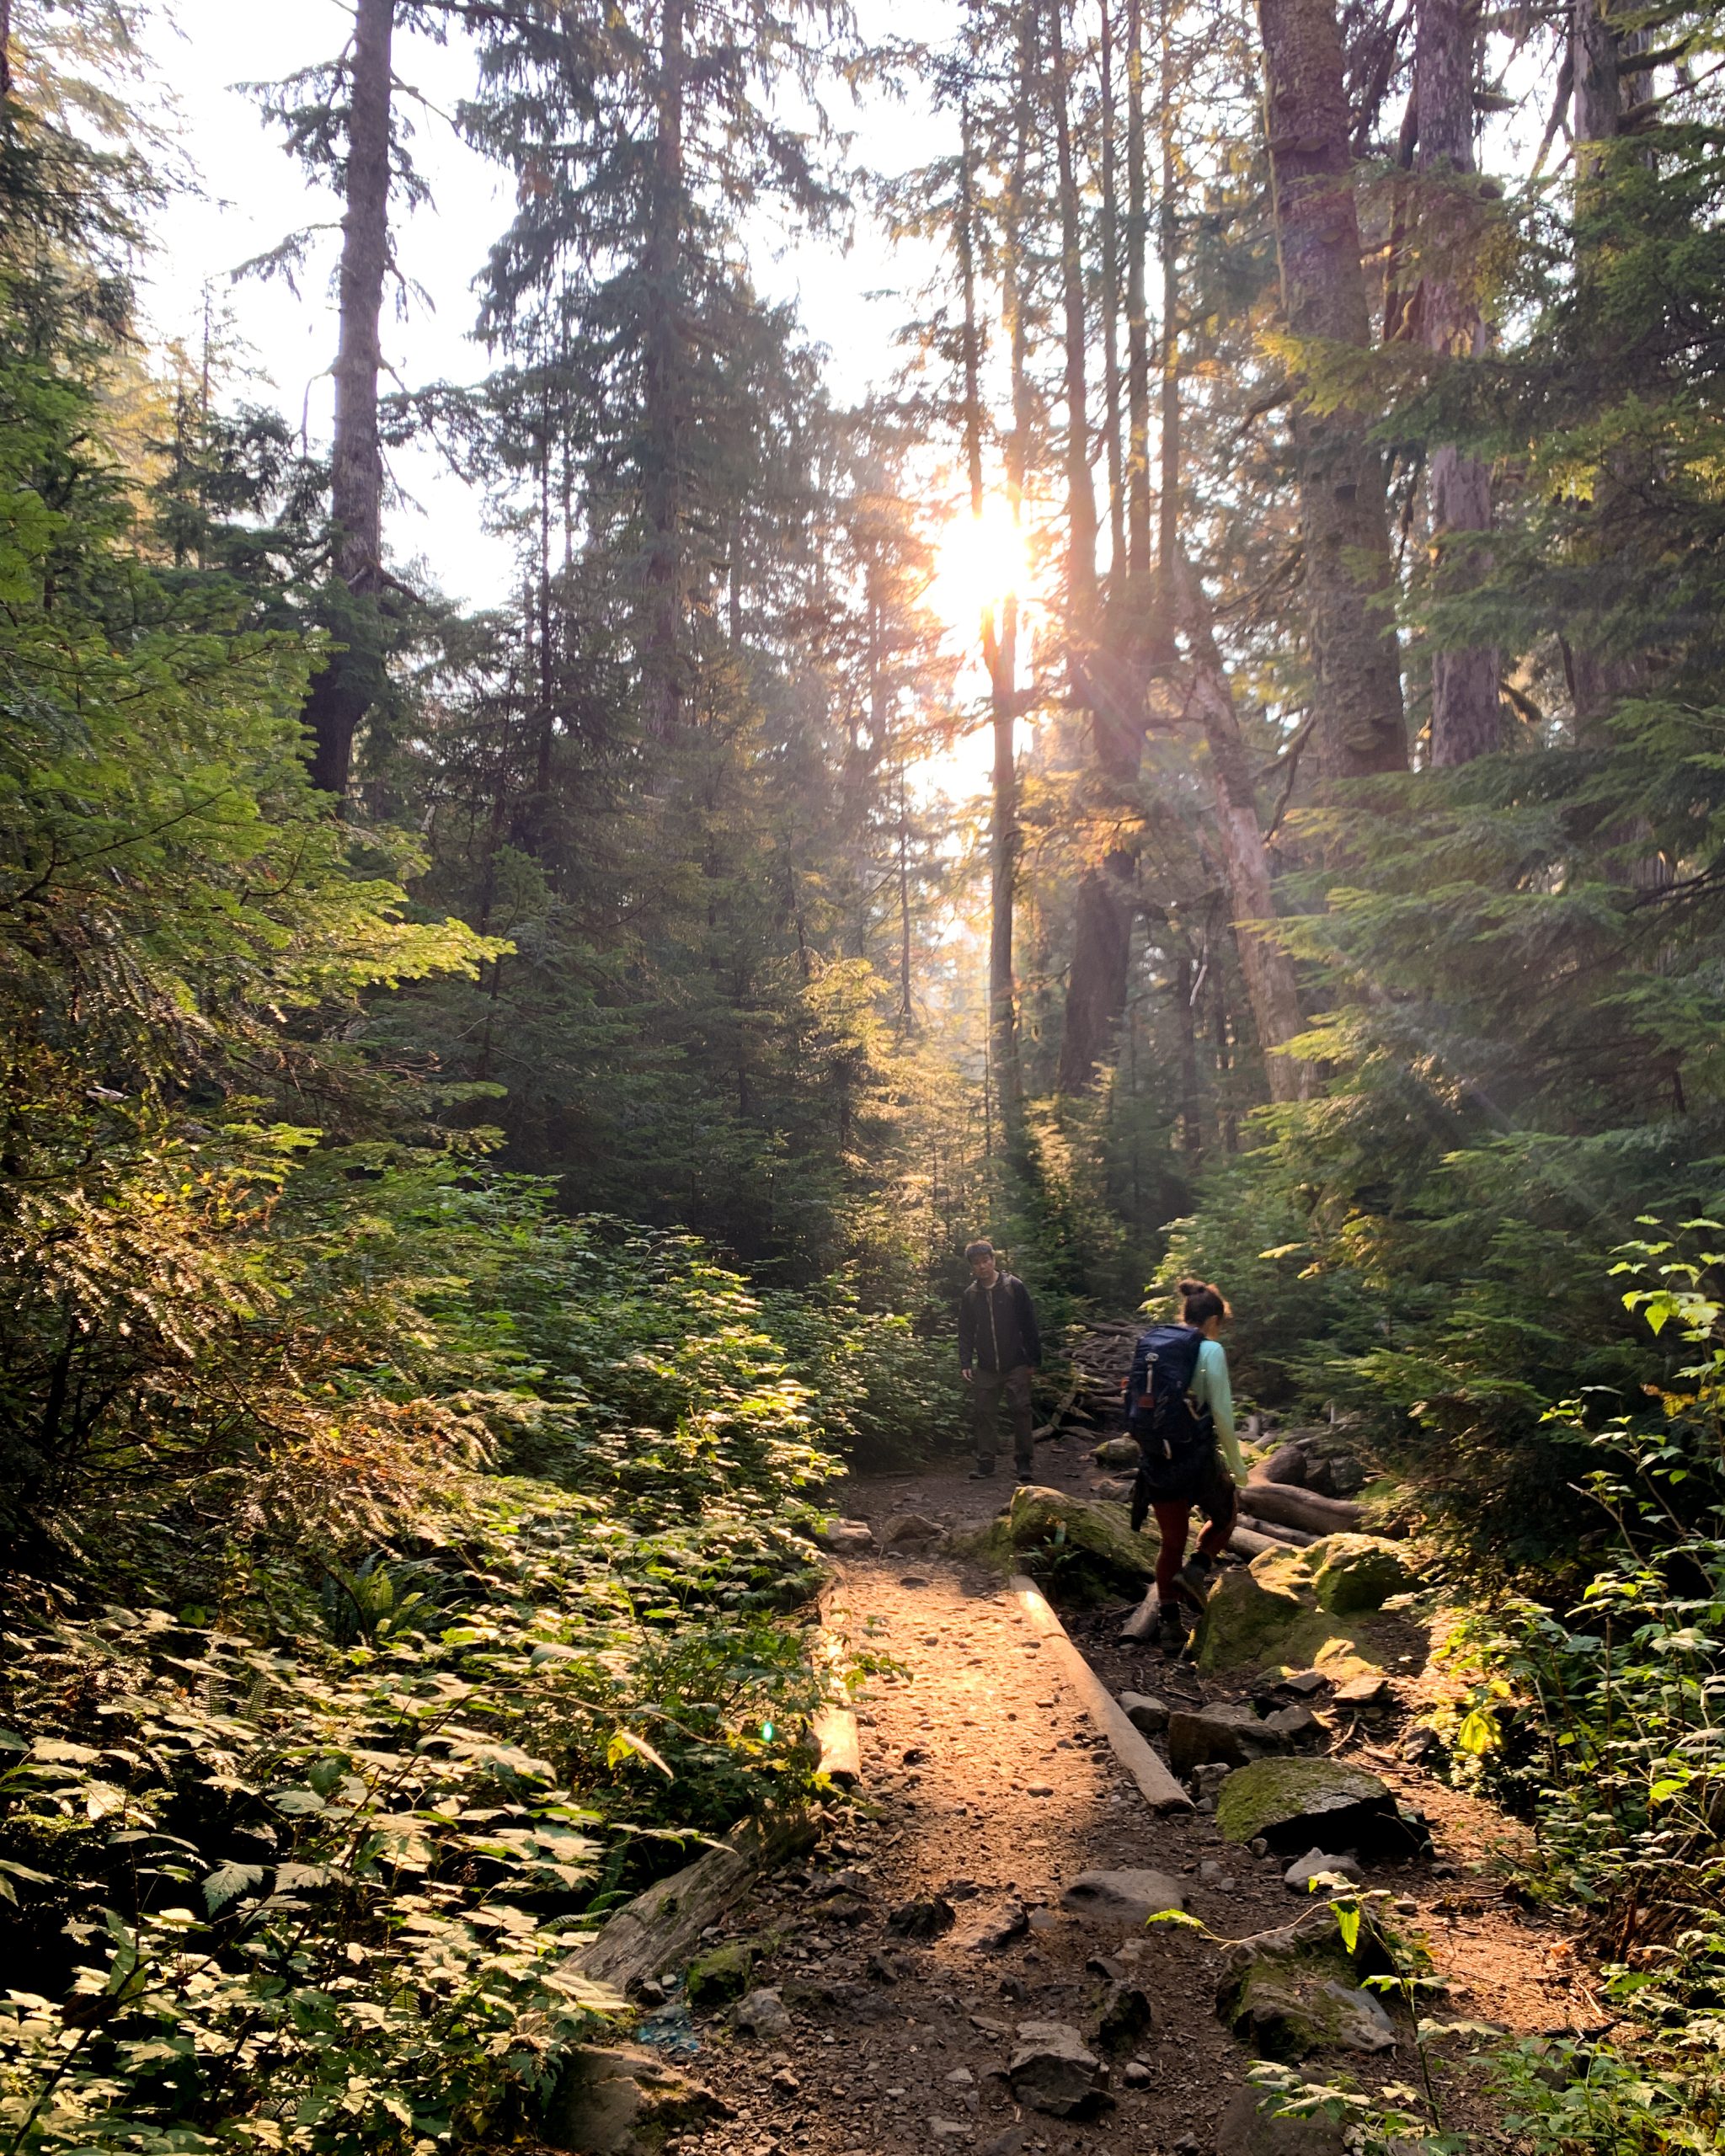 Sun peeking through the trees and green foliage on the Heather Lake hiking trail in Washington.